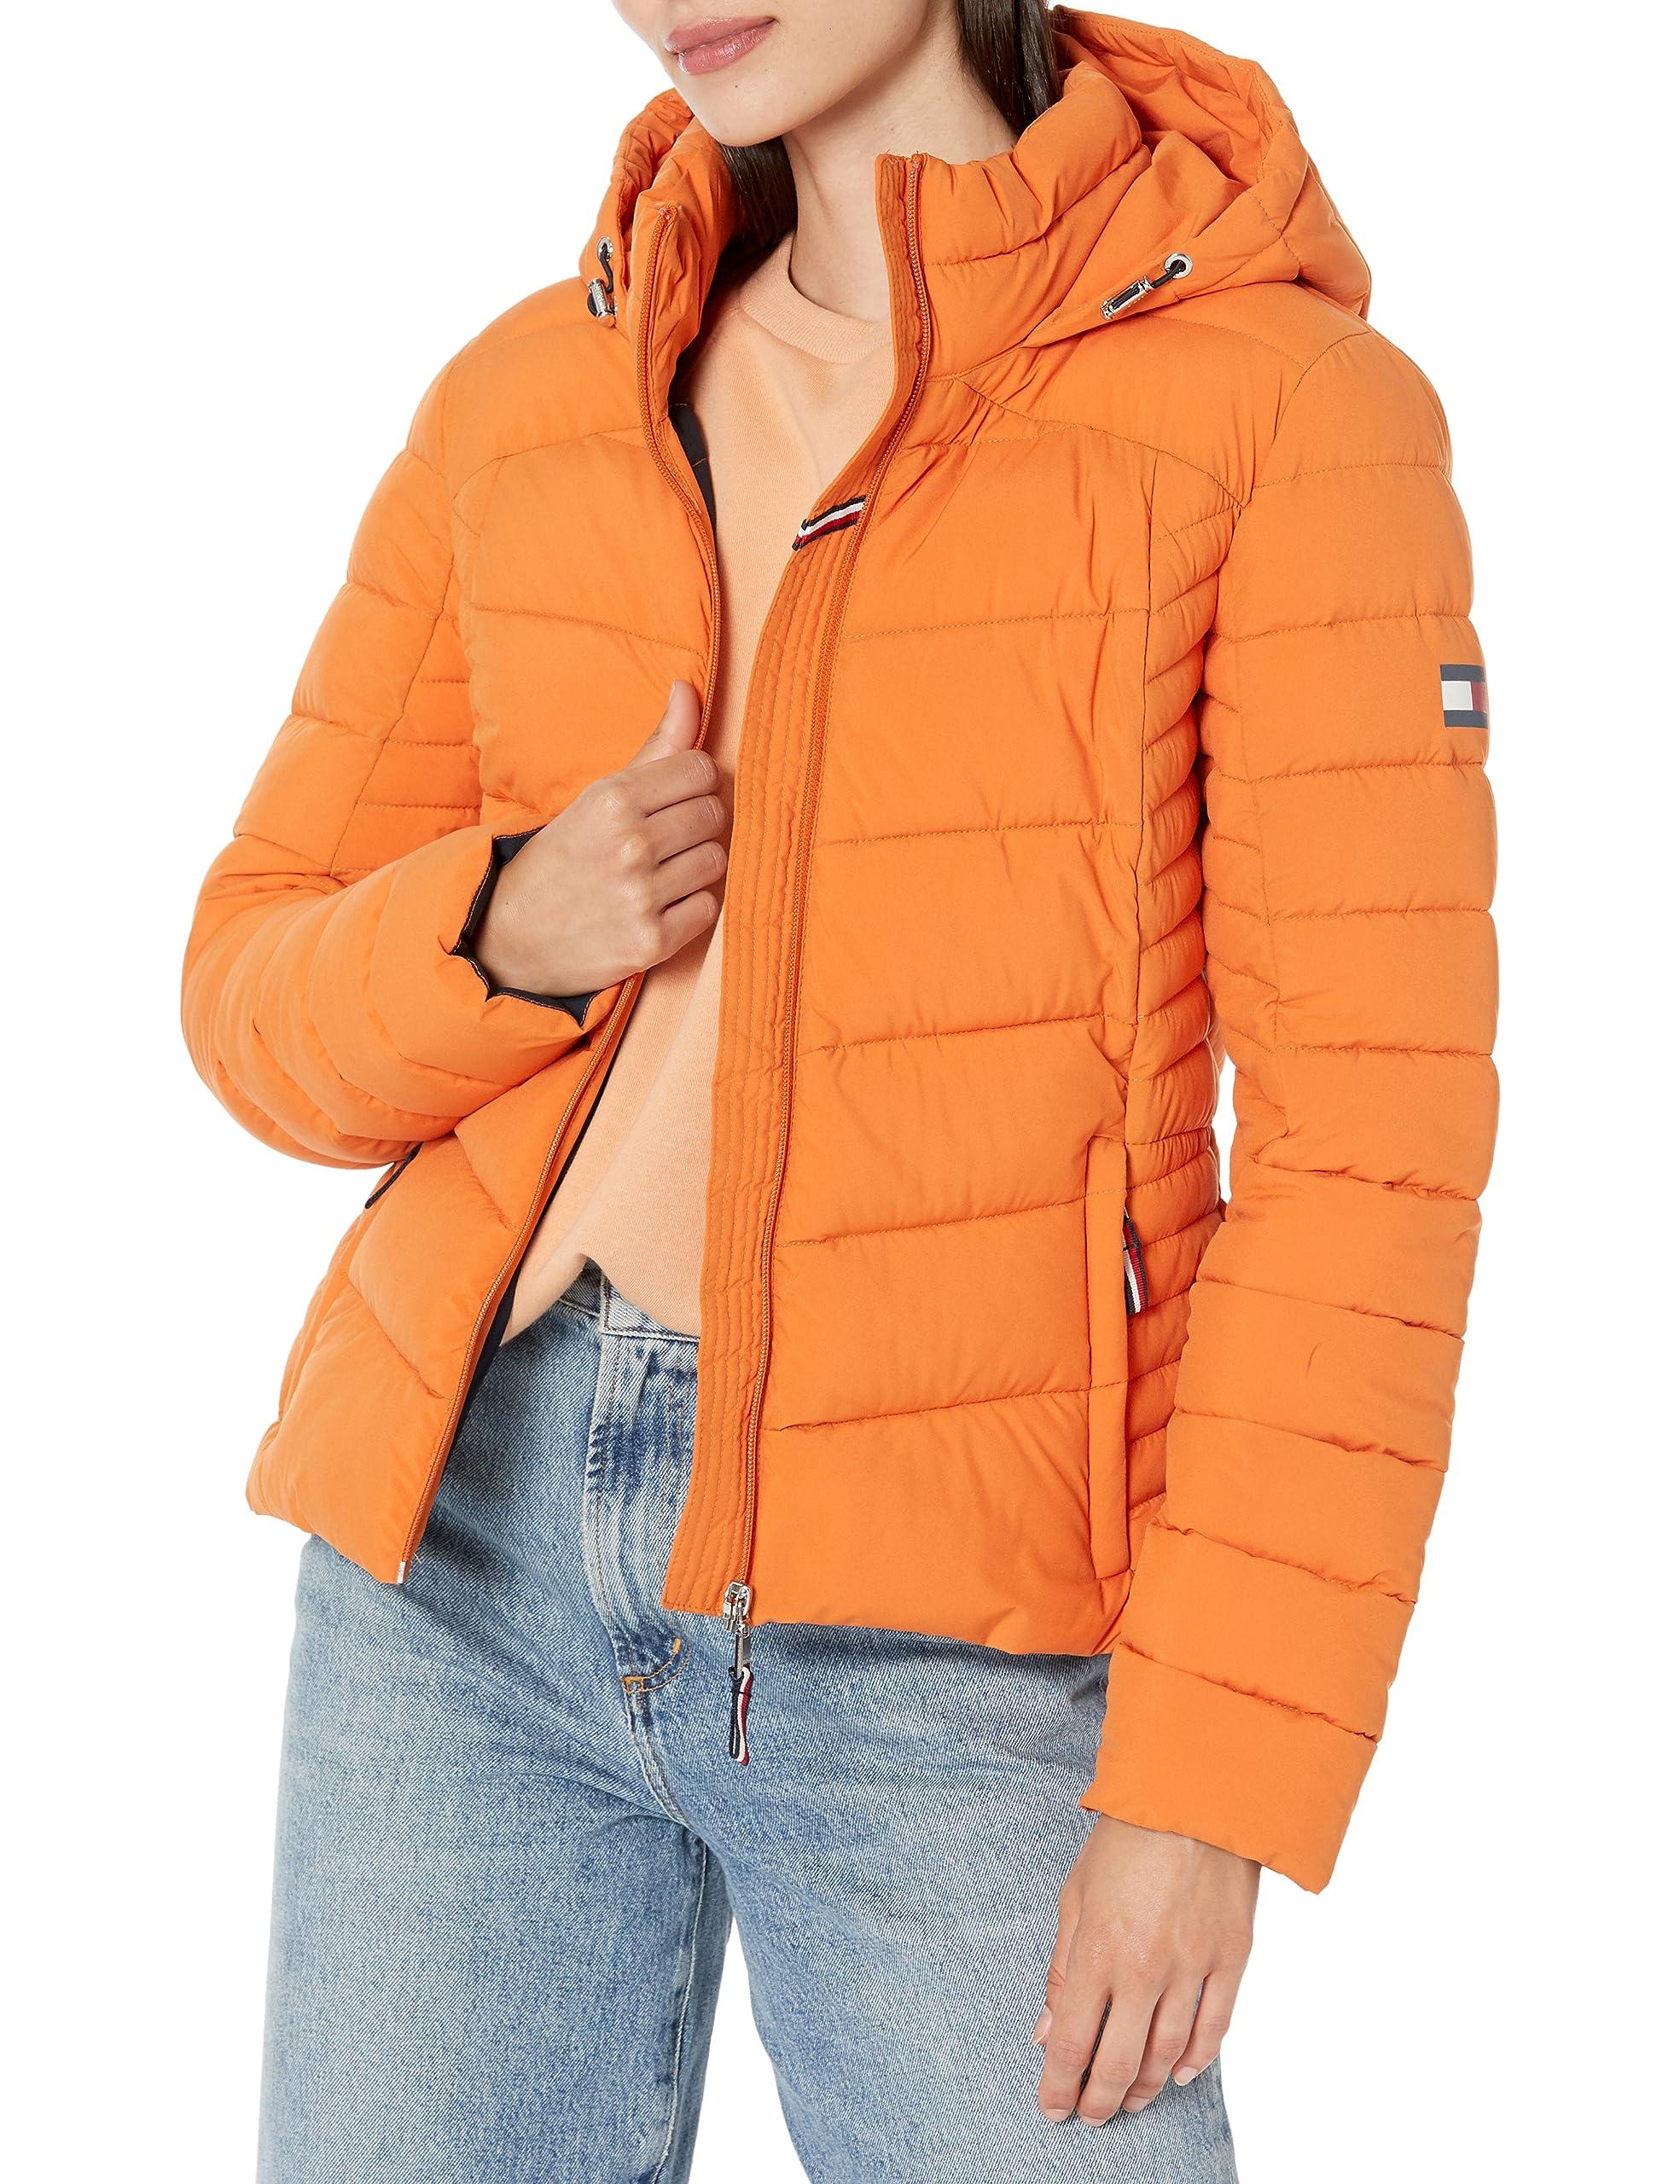 Tommy Hilfiger Hooded Zip Front Short Packable Jacket in Orange | Lyst